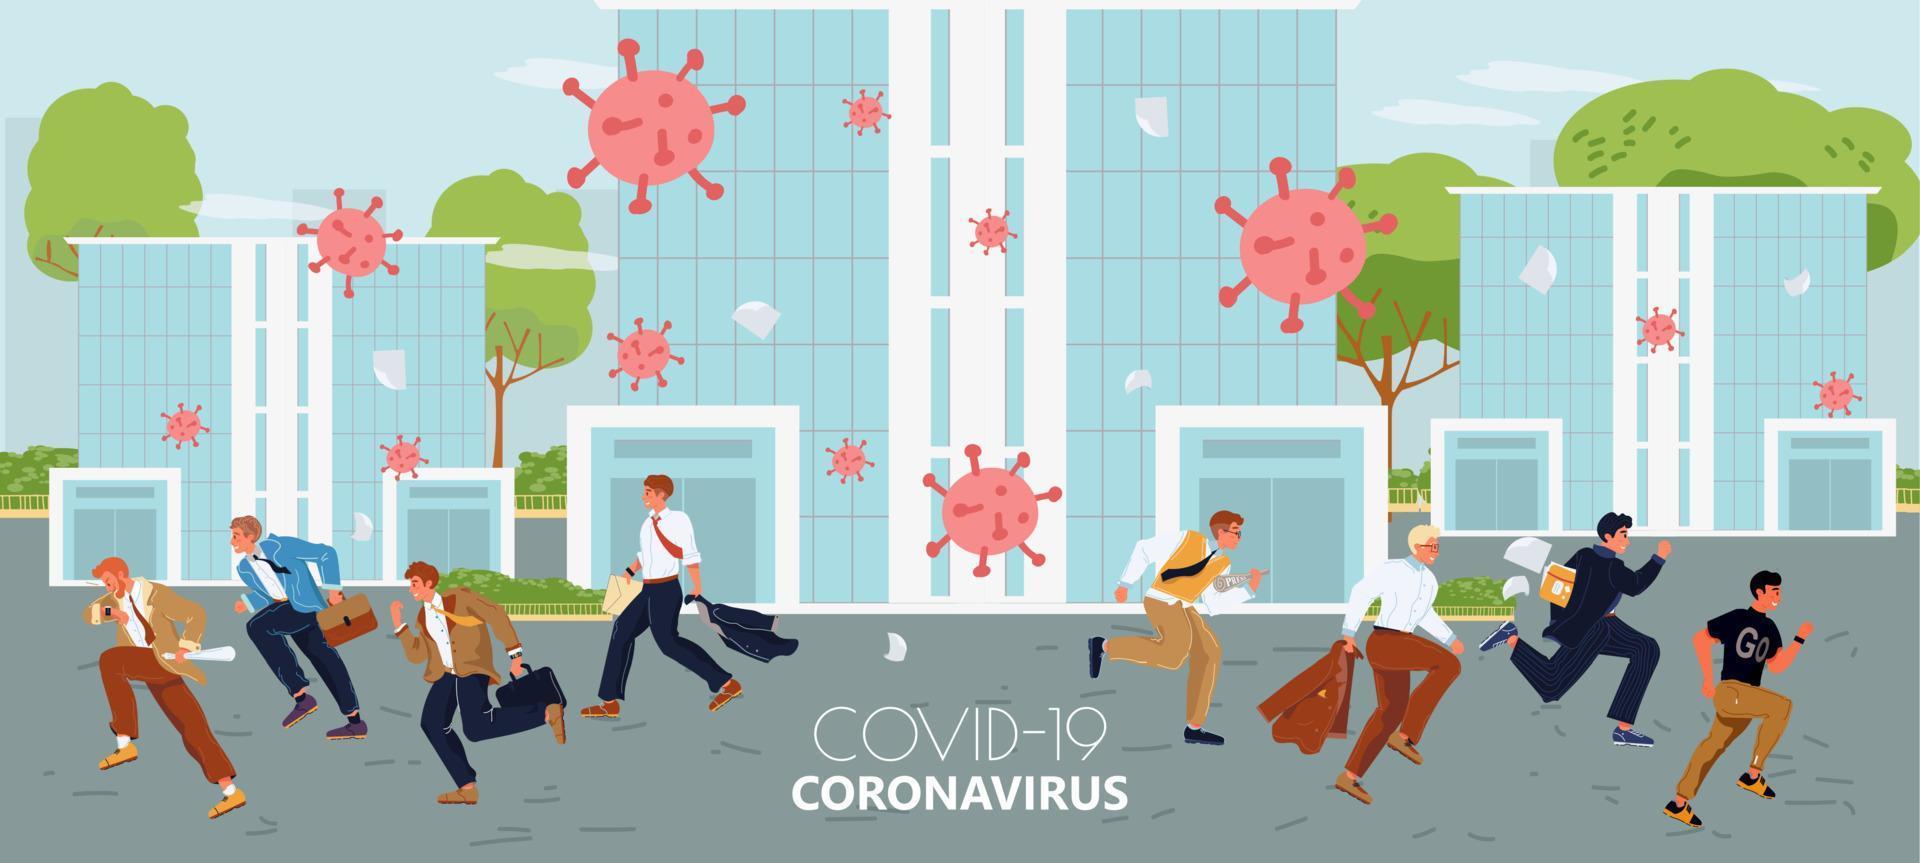 Season flu, coronavirus influenza pandemic concept vector